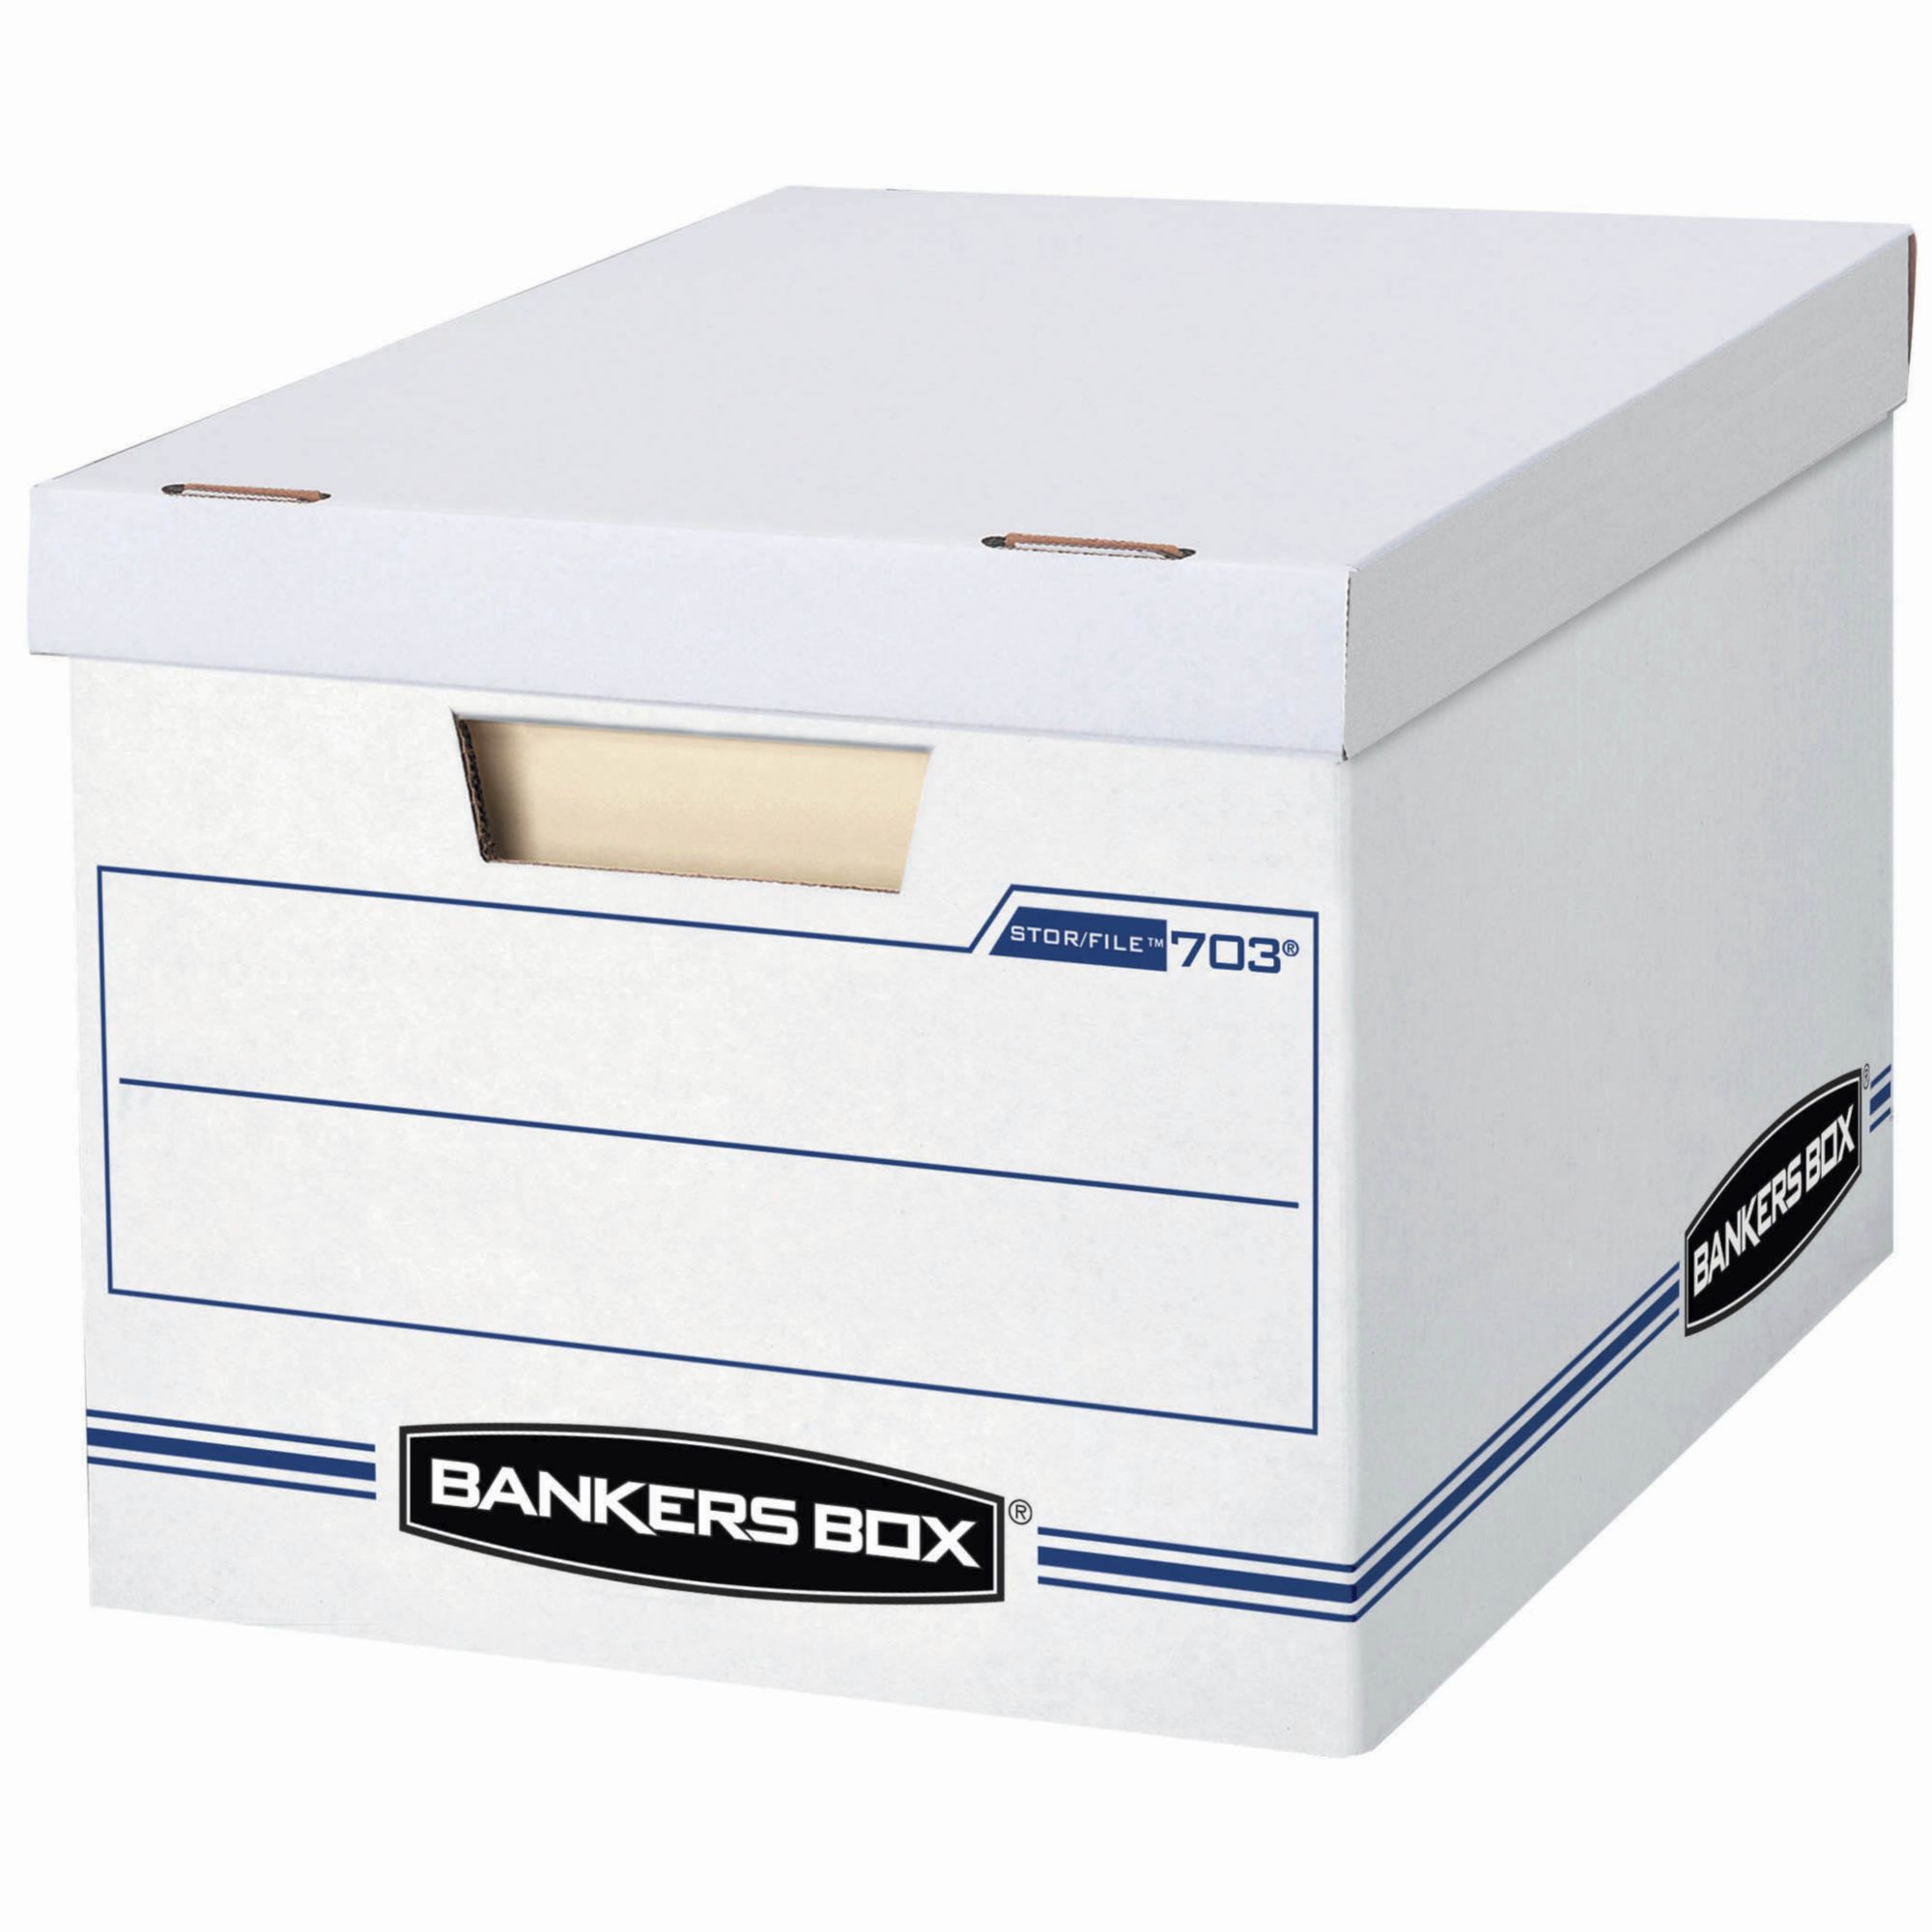 Bankers Box File/Store Record Storage Boxes, 10 pk. - White